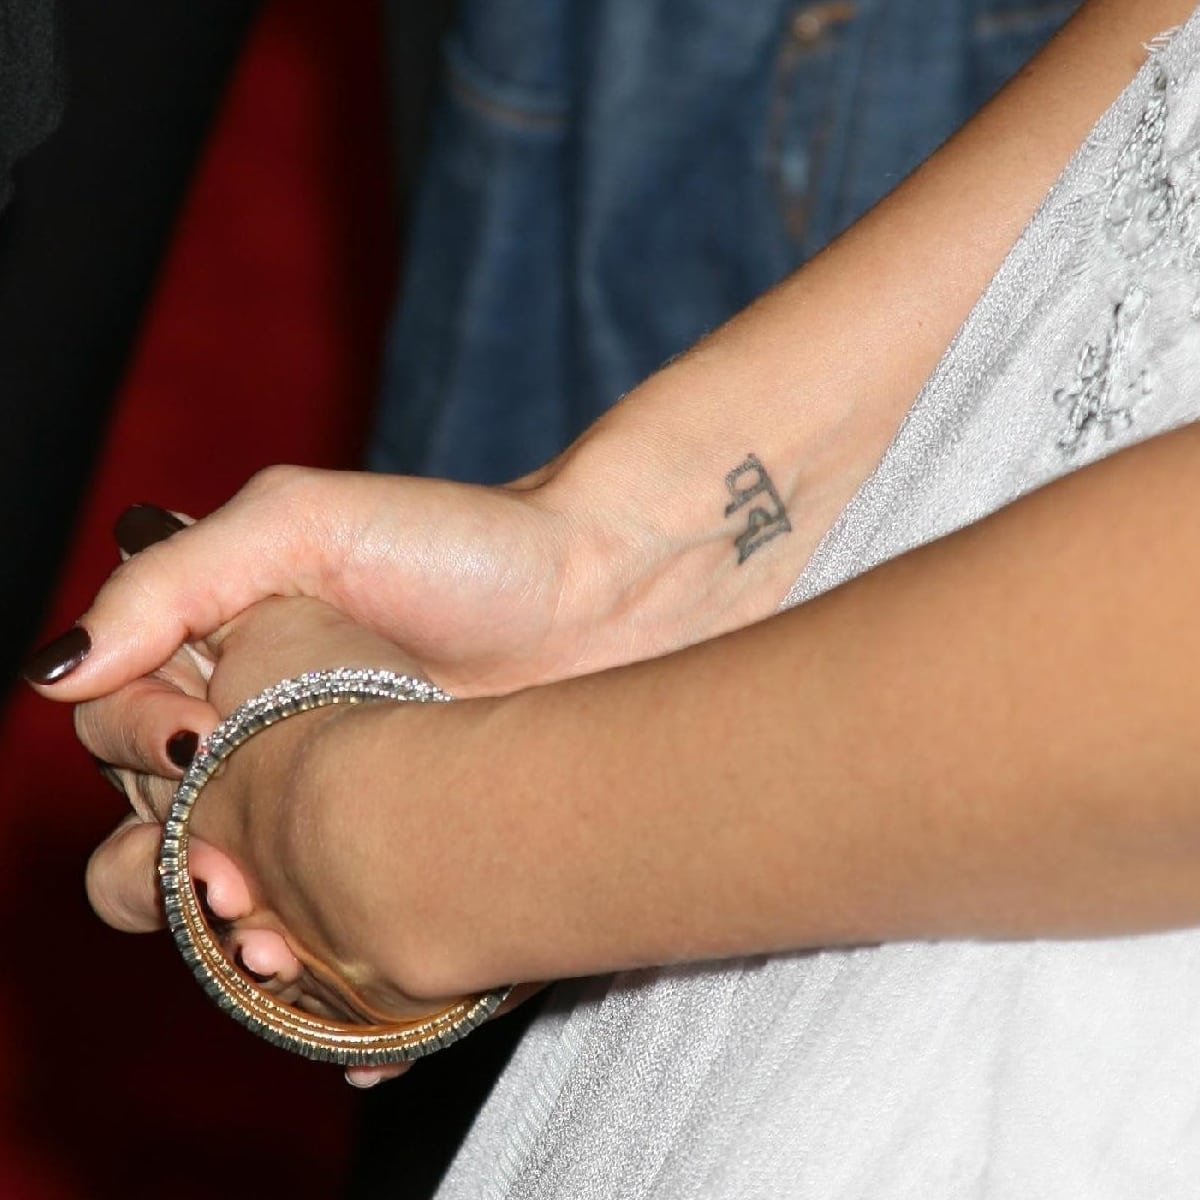 Jessica Alba's Sanskrit “Padma” tattoo means "lotus flower" in English